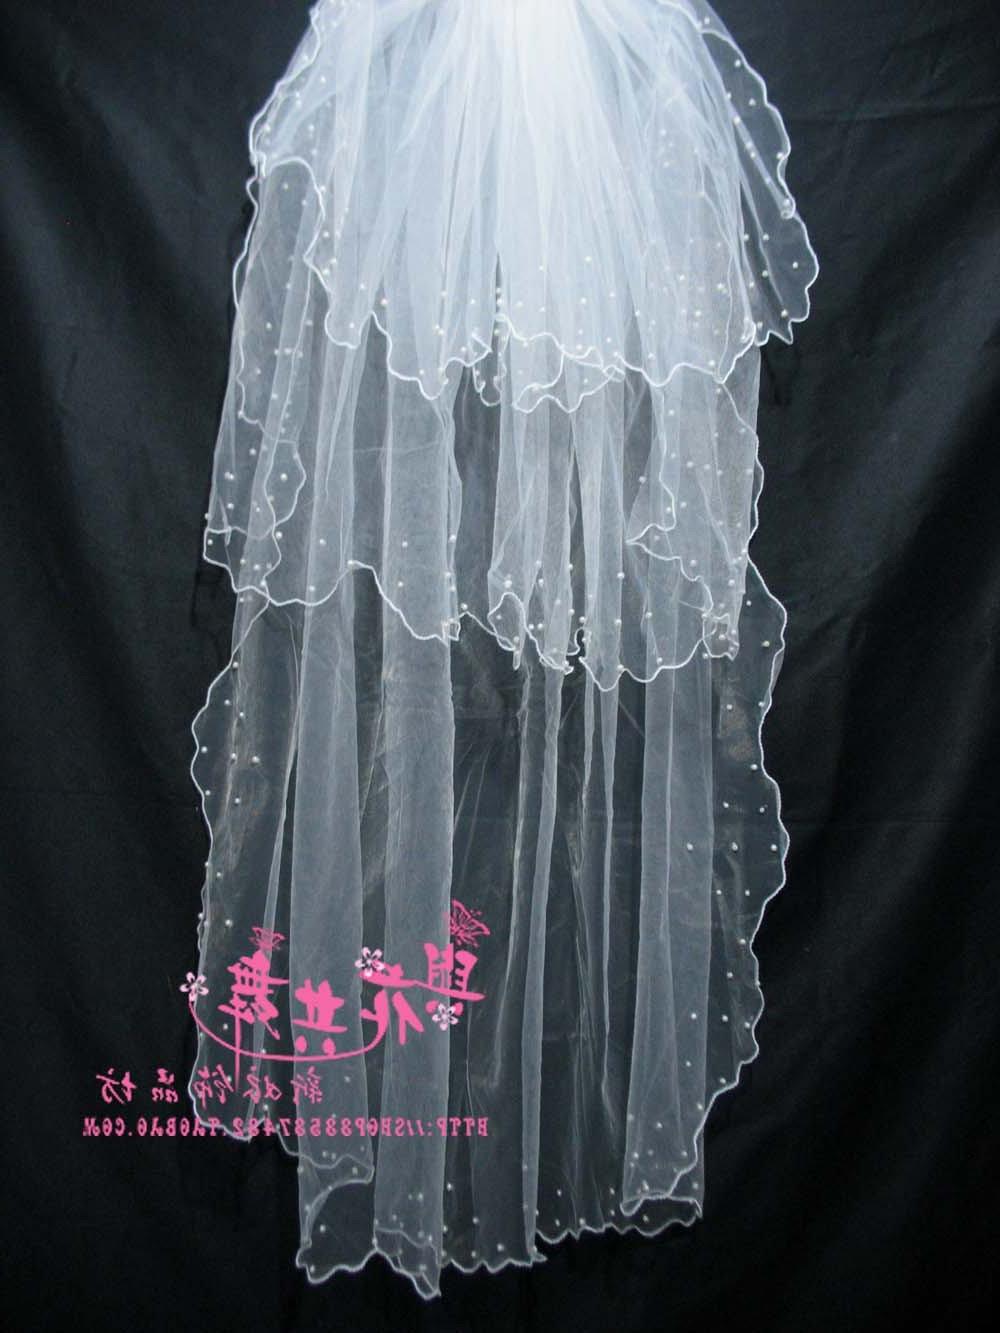 alibaba wedding veils